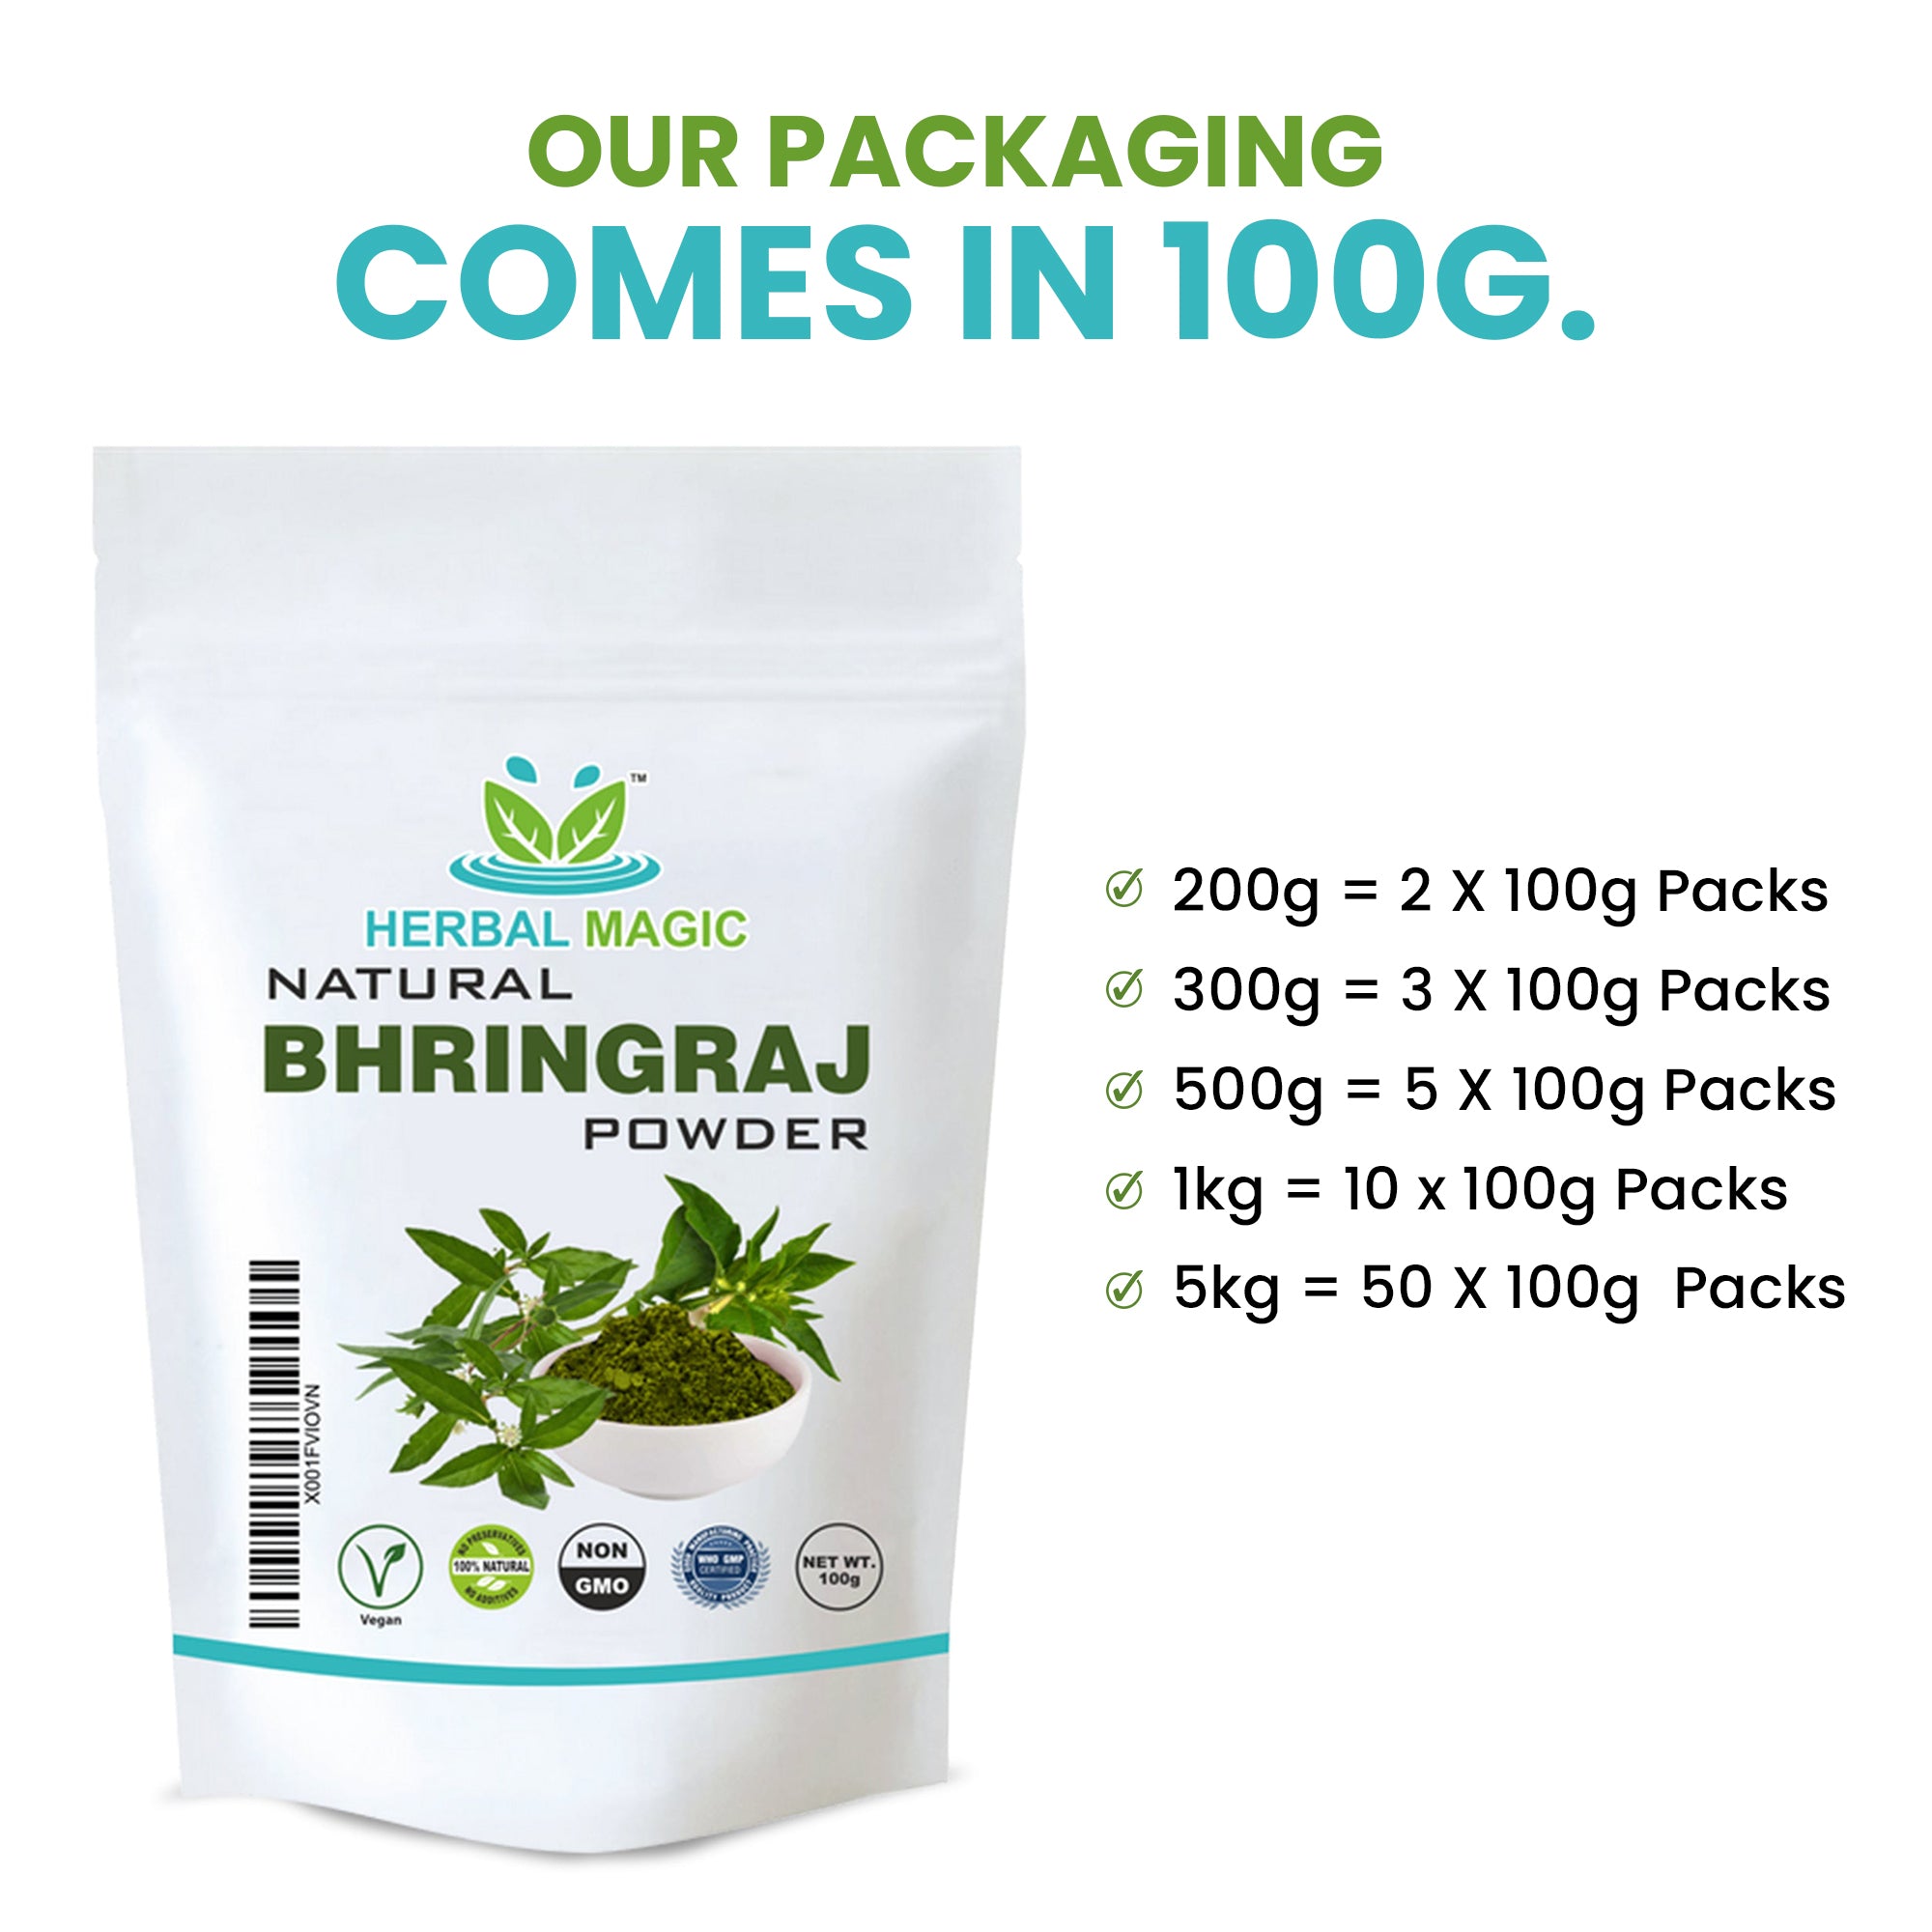 Natural Bhringraj powder